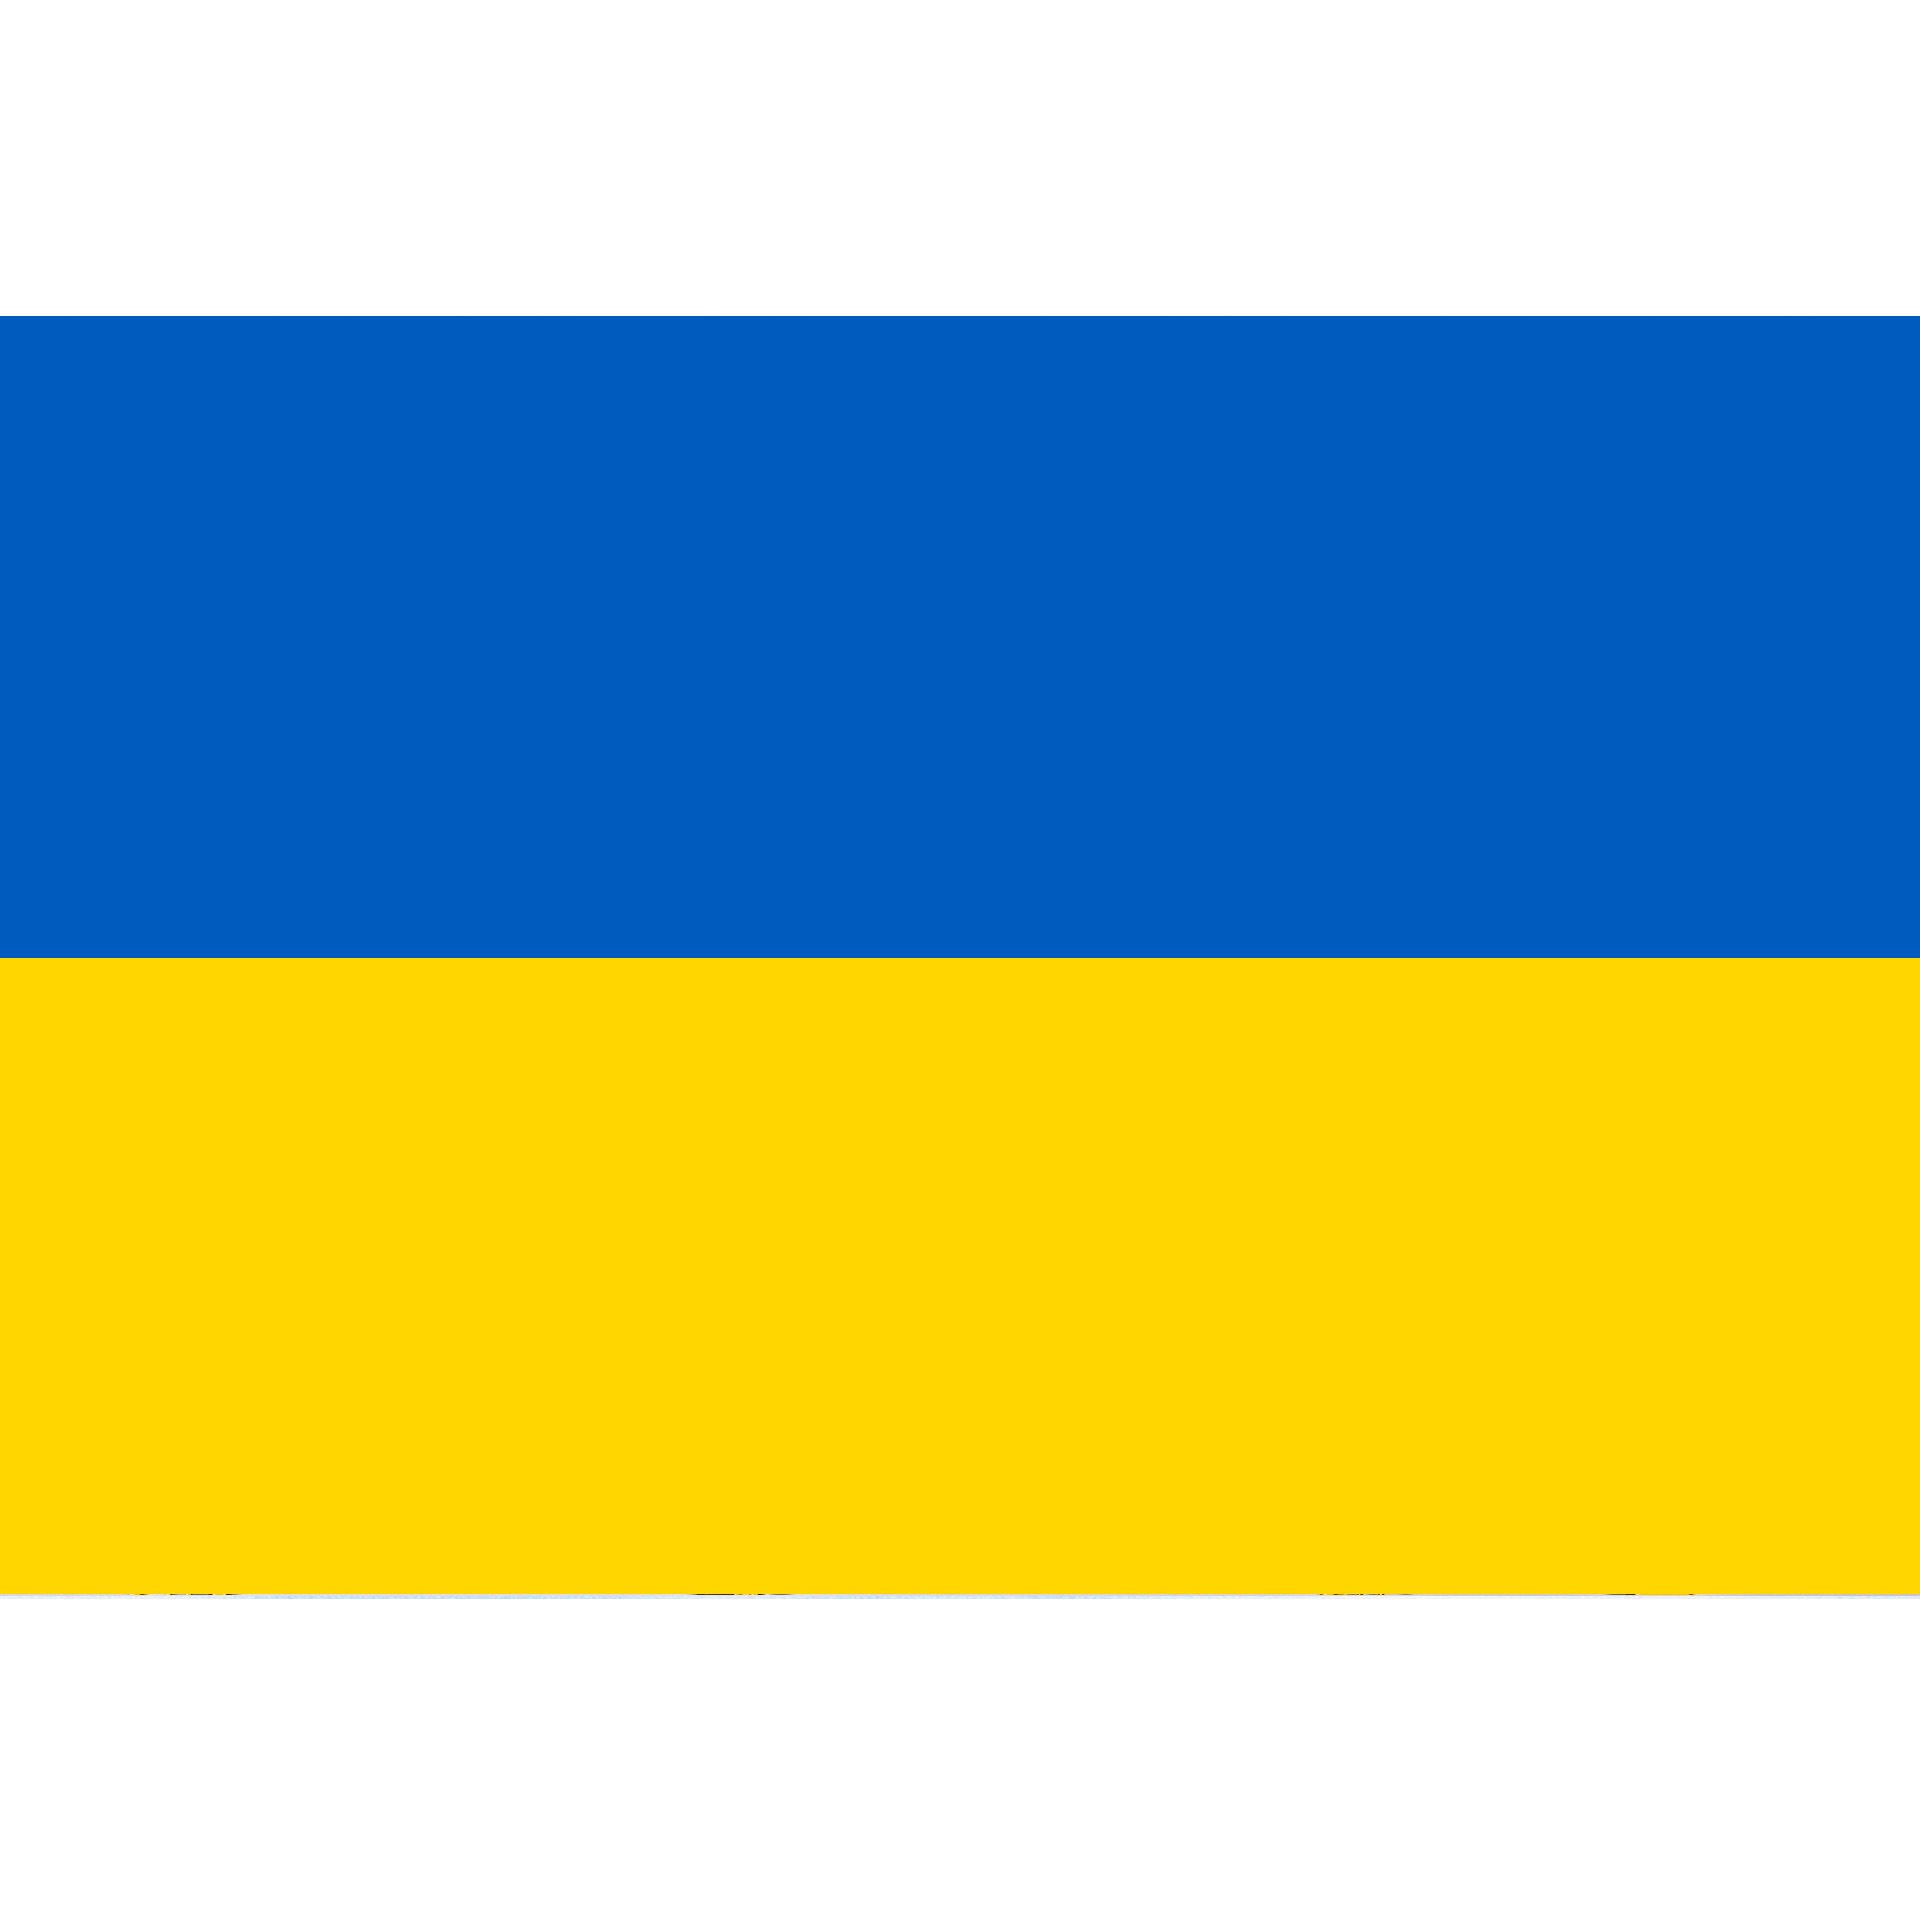 #WspieramUkrainę